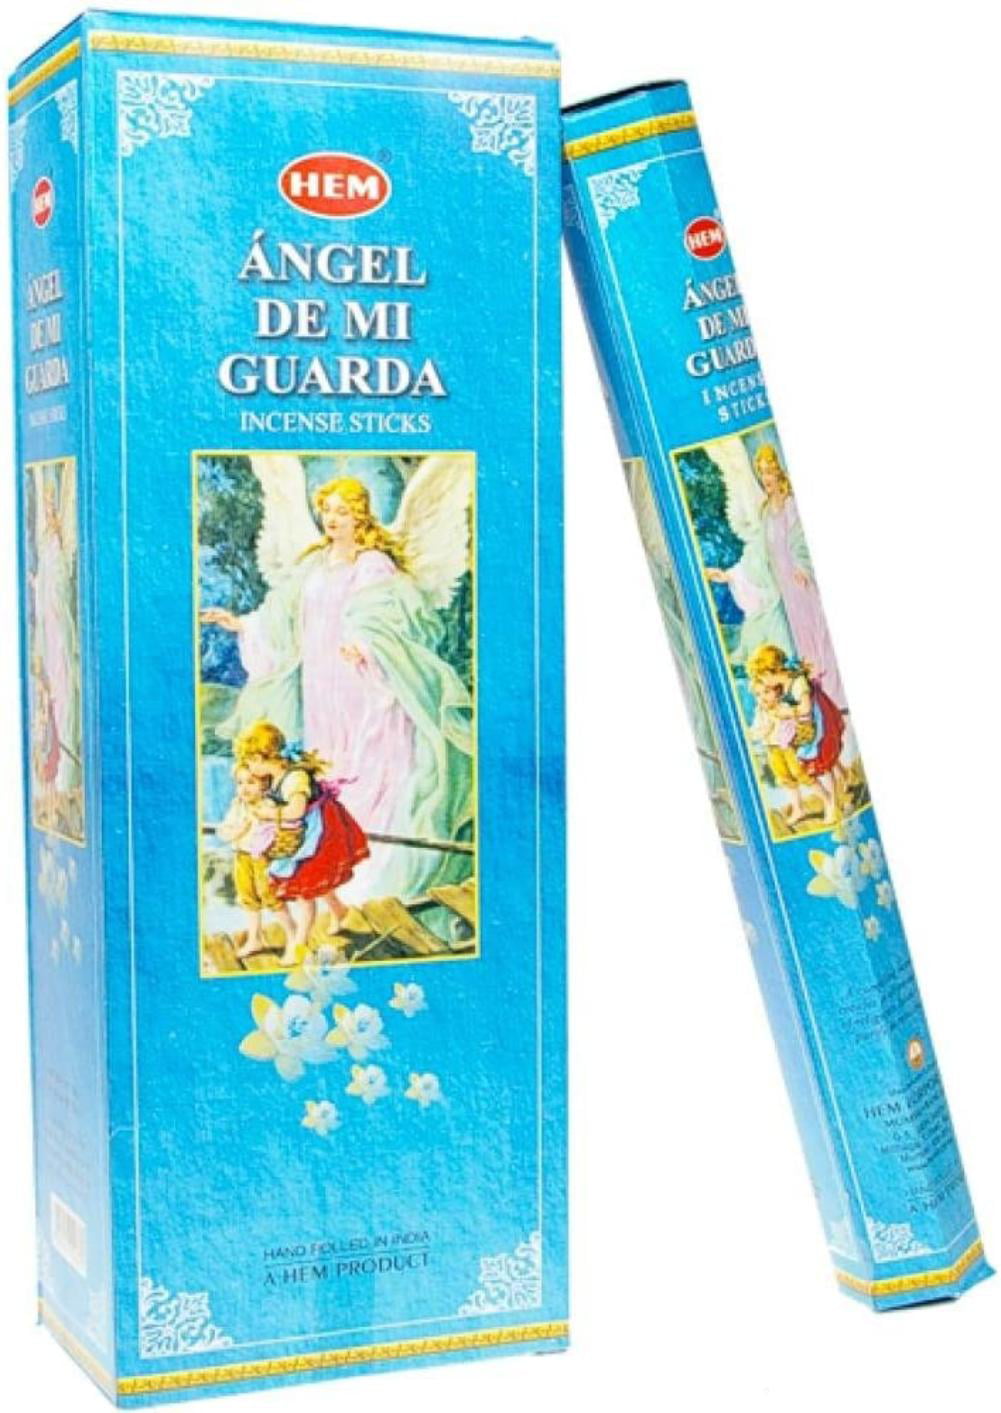 You Pick Amount Hem Incense ANGEL DE MI GUARDA 20 60 100 120 Sticks Guardian 